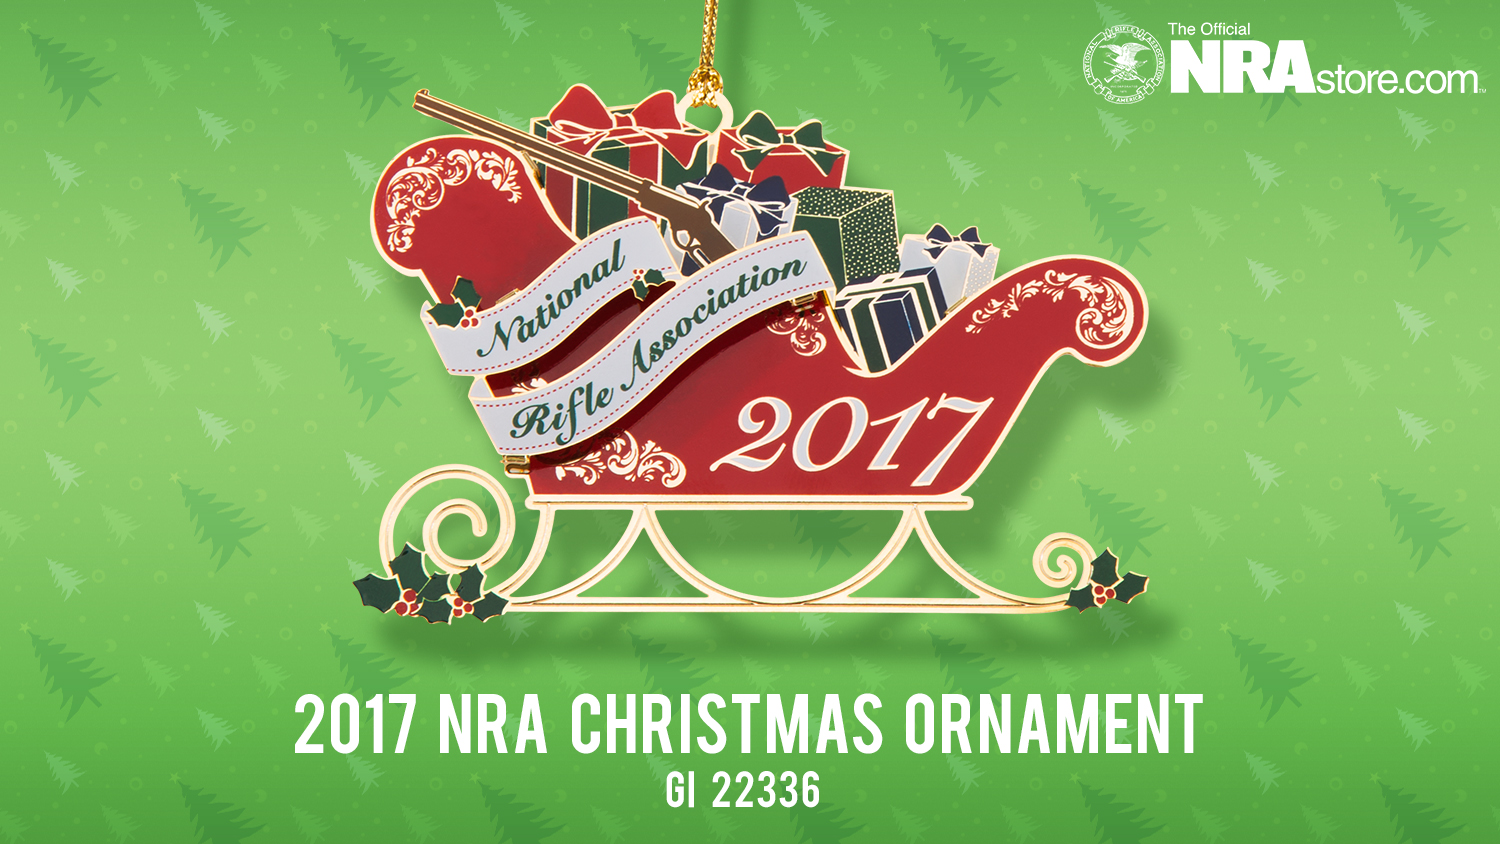 NRAstore Product Highlight: 2017 NRA Christmas Ornament